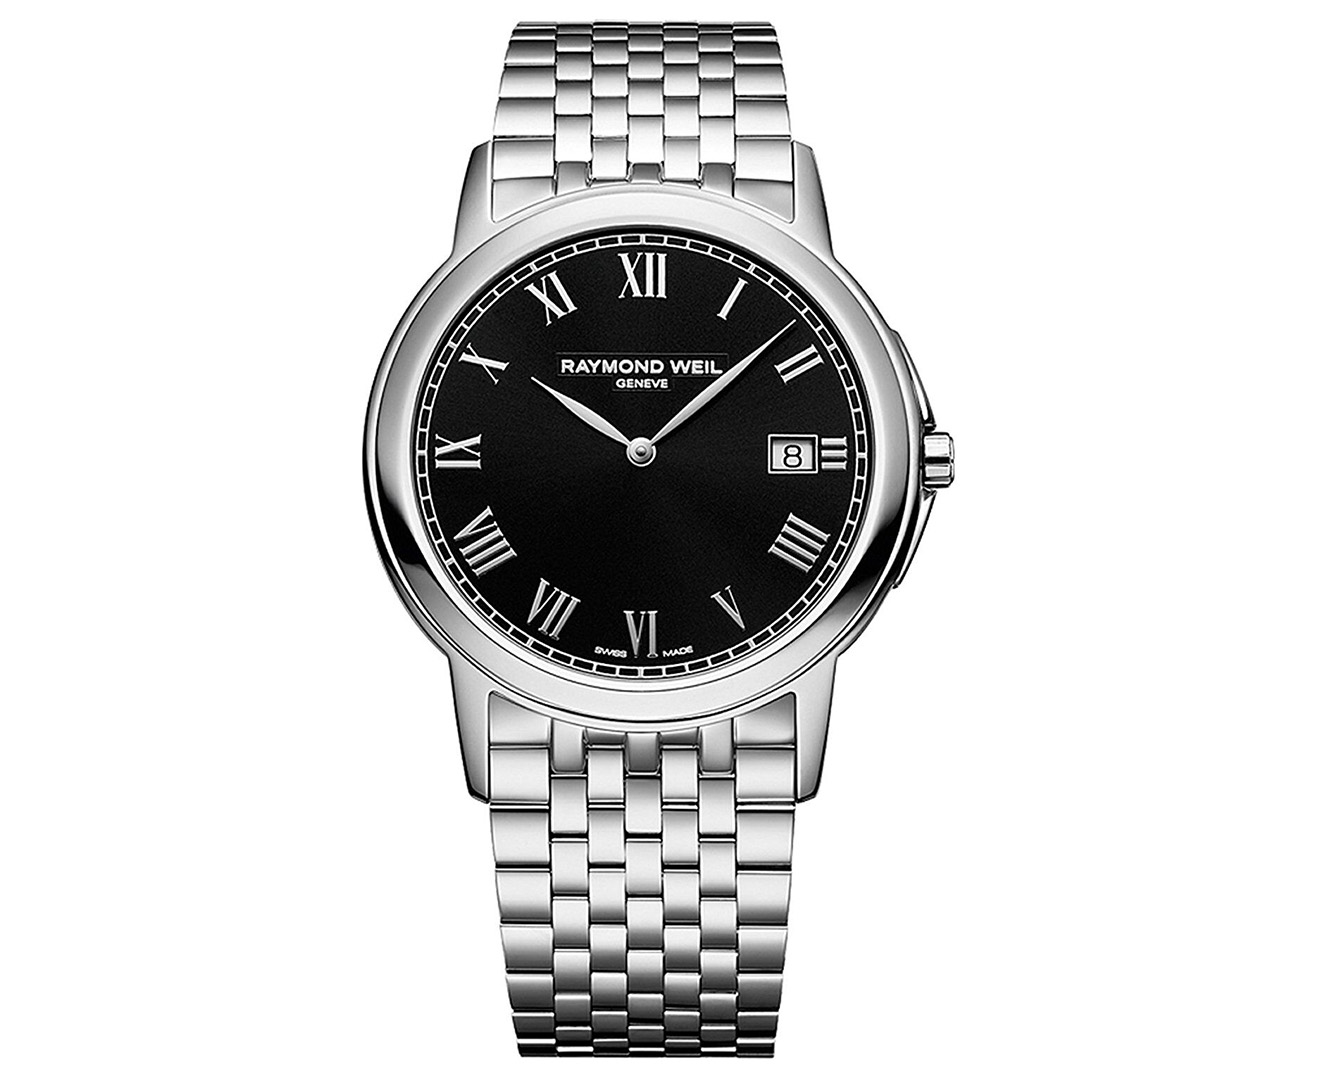 Raymond Weil Men's 39mm Tradition Watch - Silver/Black | Catch.co.nz